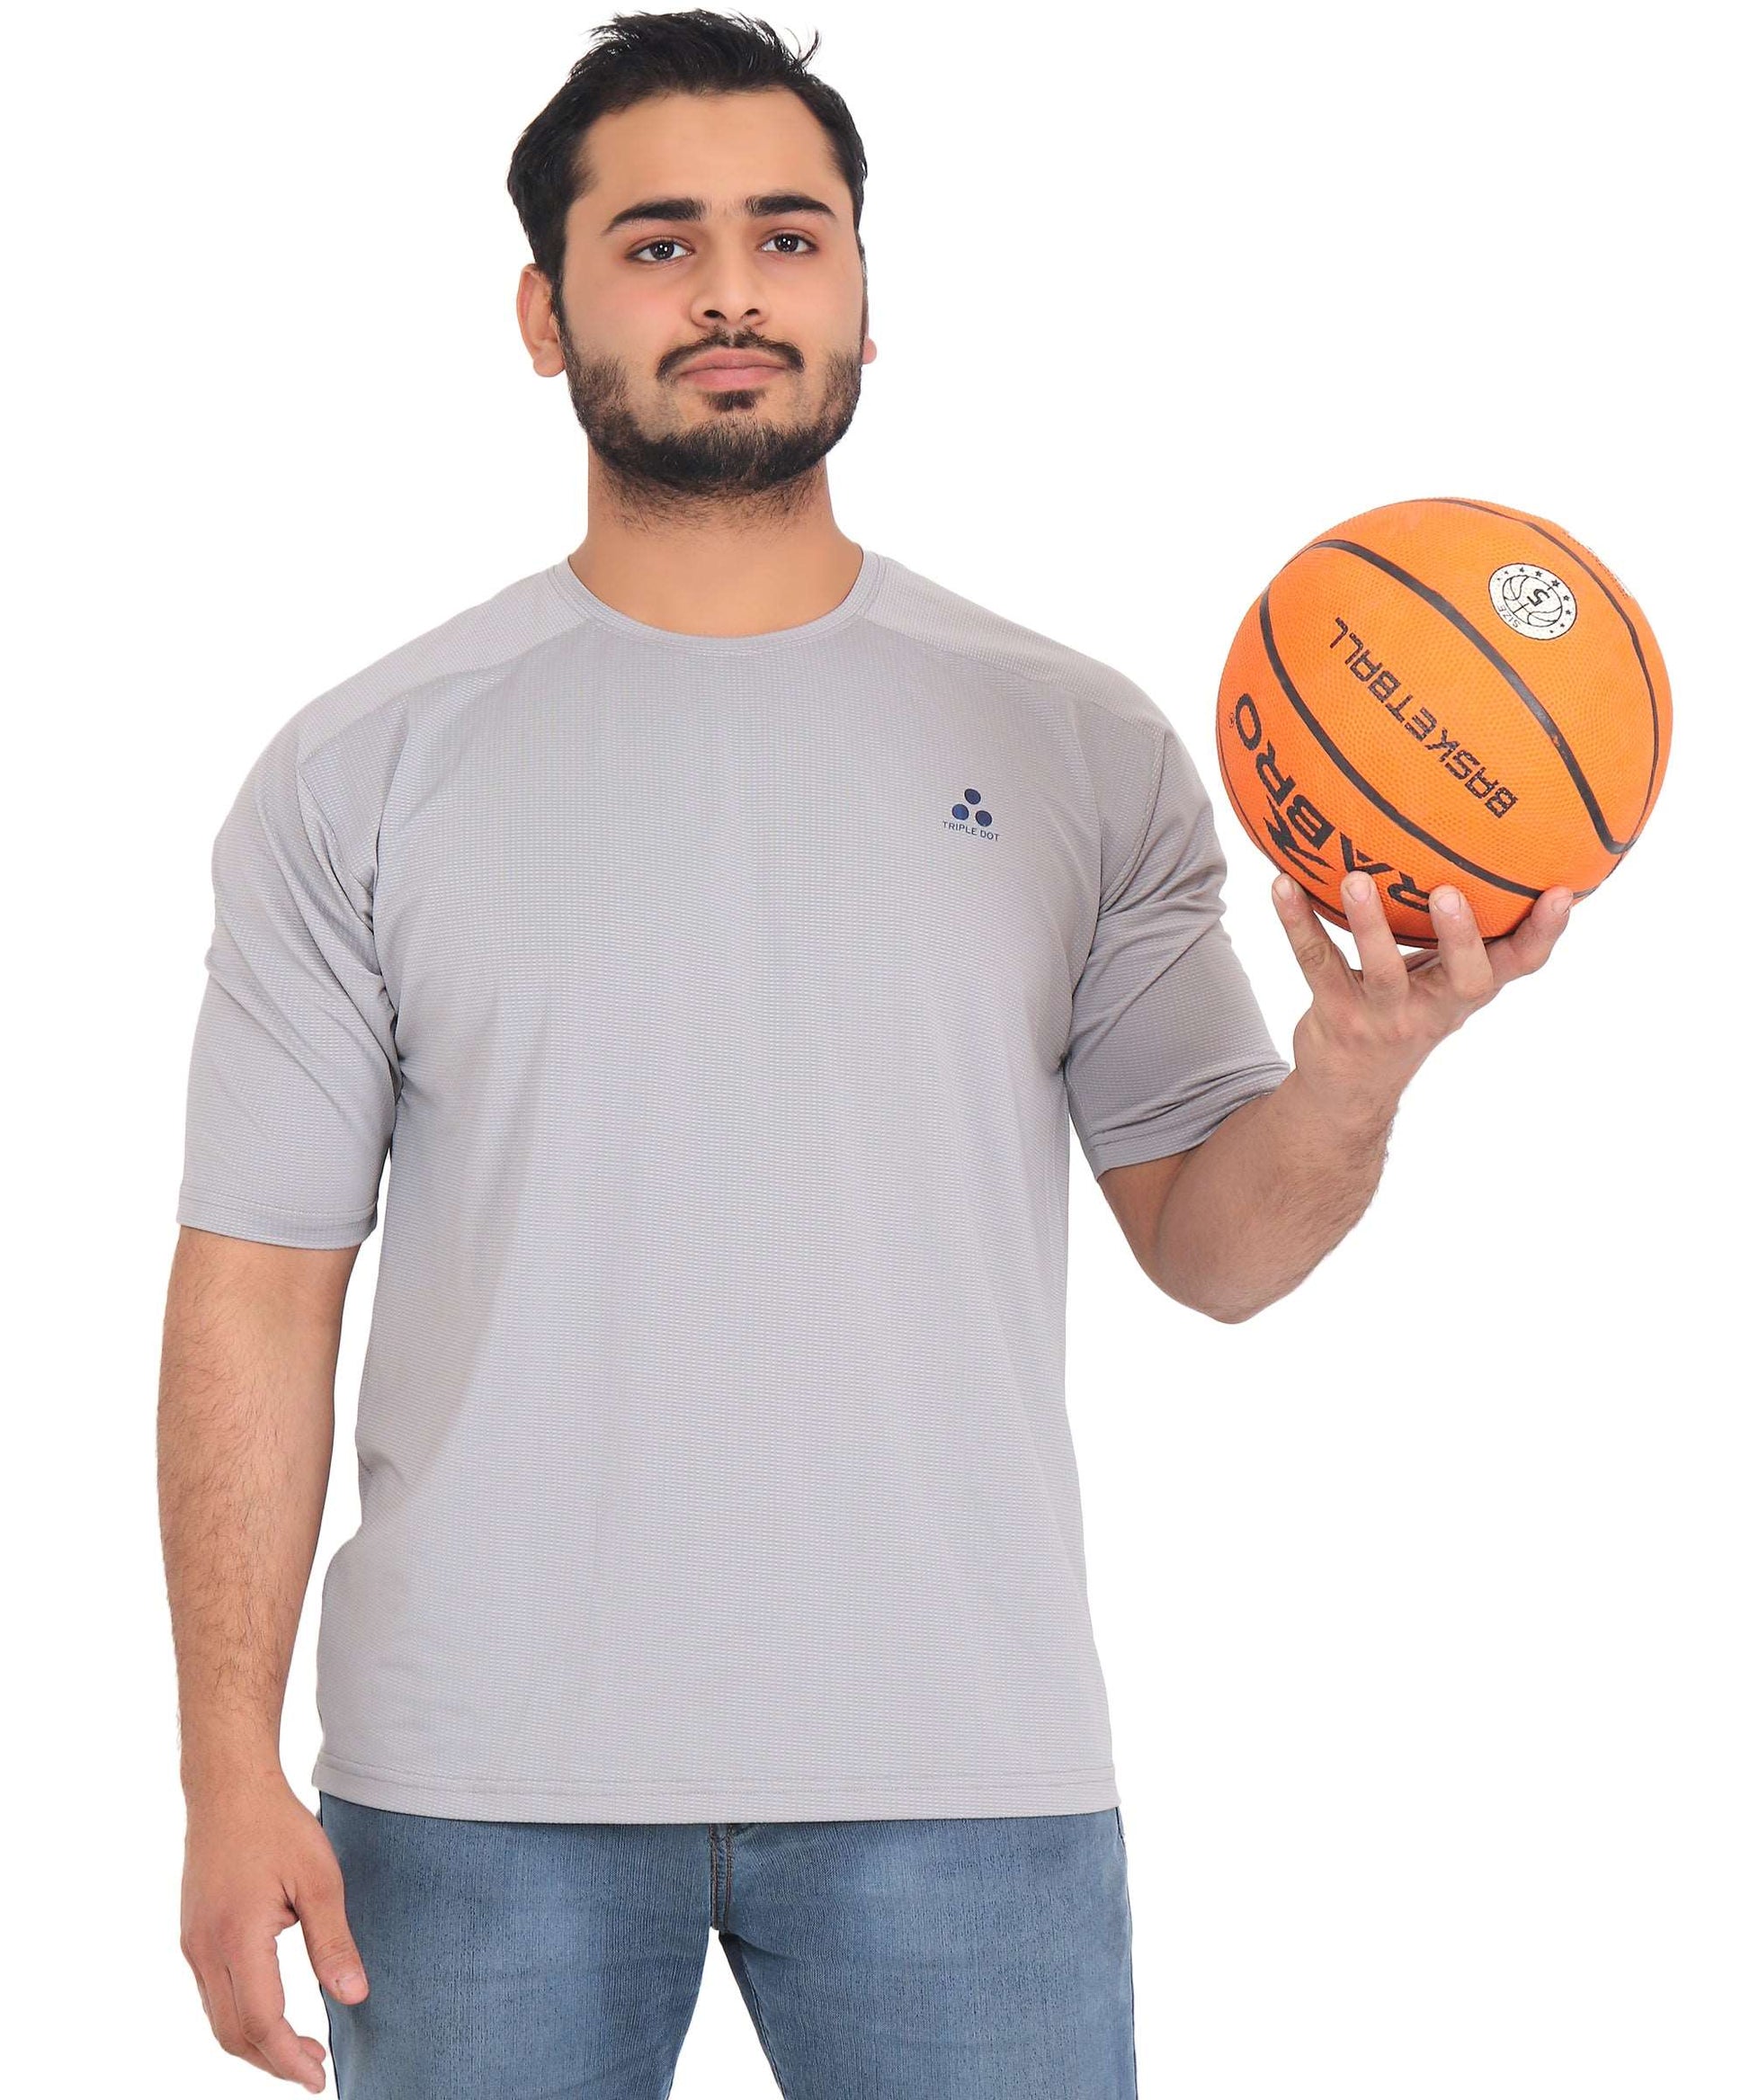 Shoulder Dri Fit Gym wear t-shirts for Men | Triple Dot Clothings